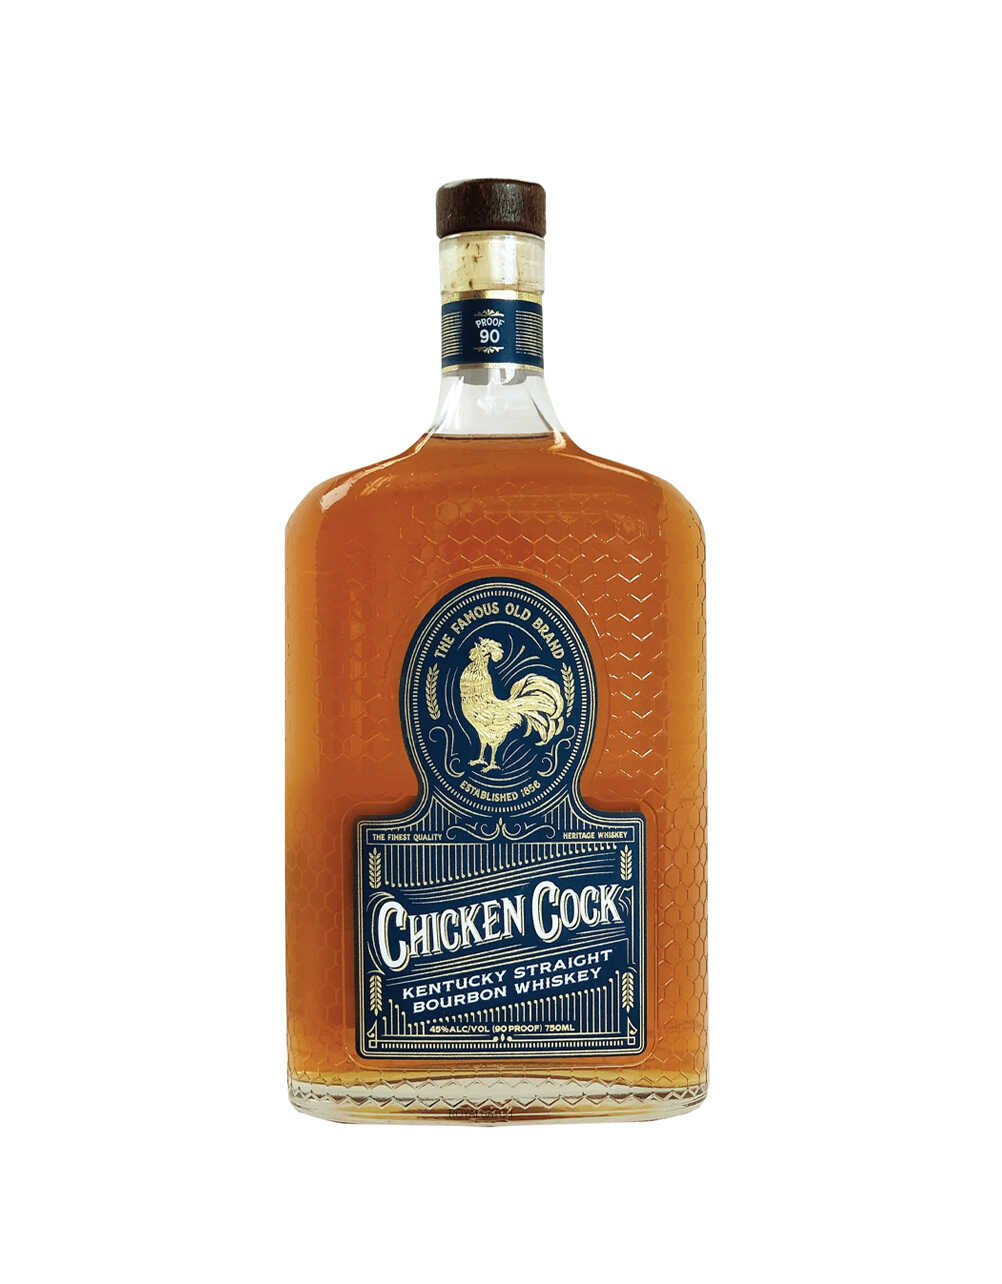 Chicken Cock Bourbon Whiskey